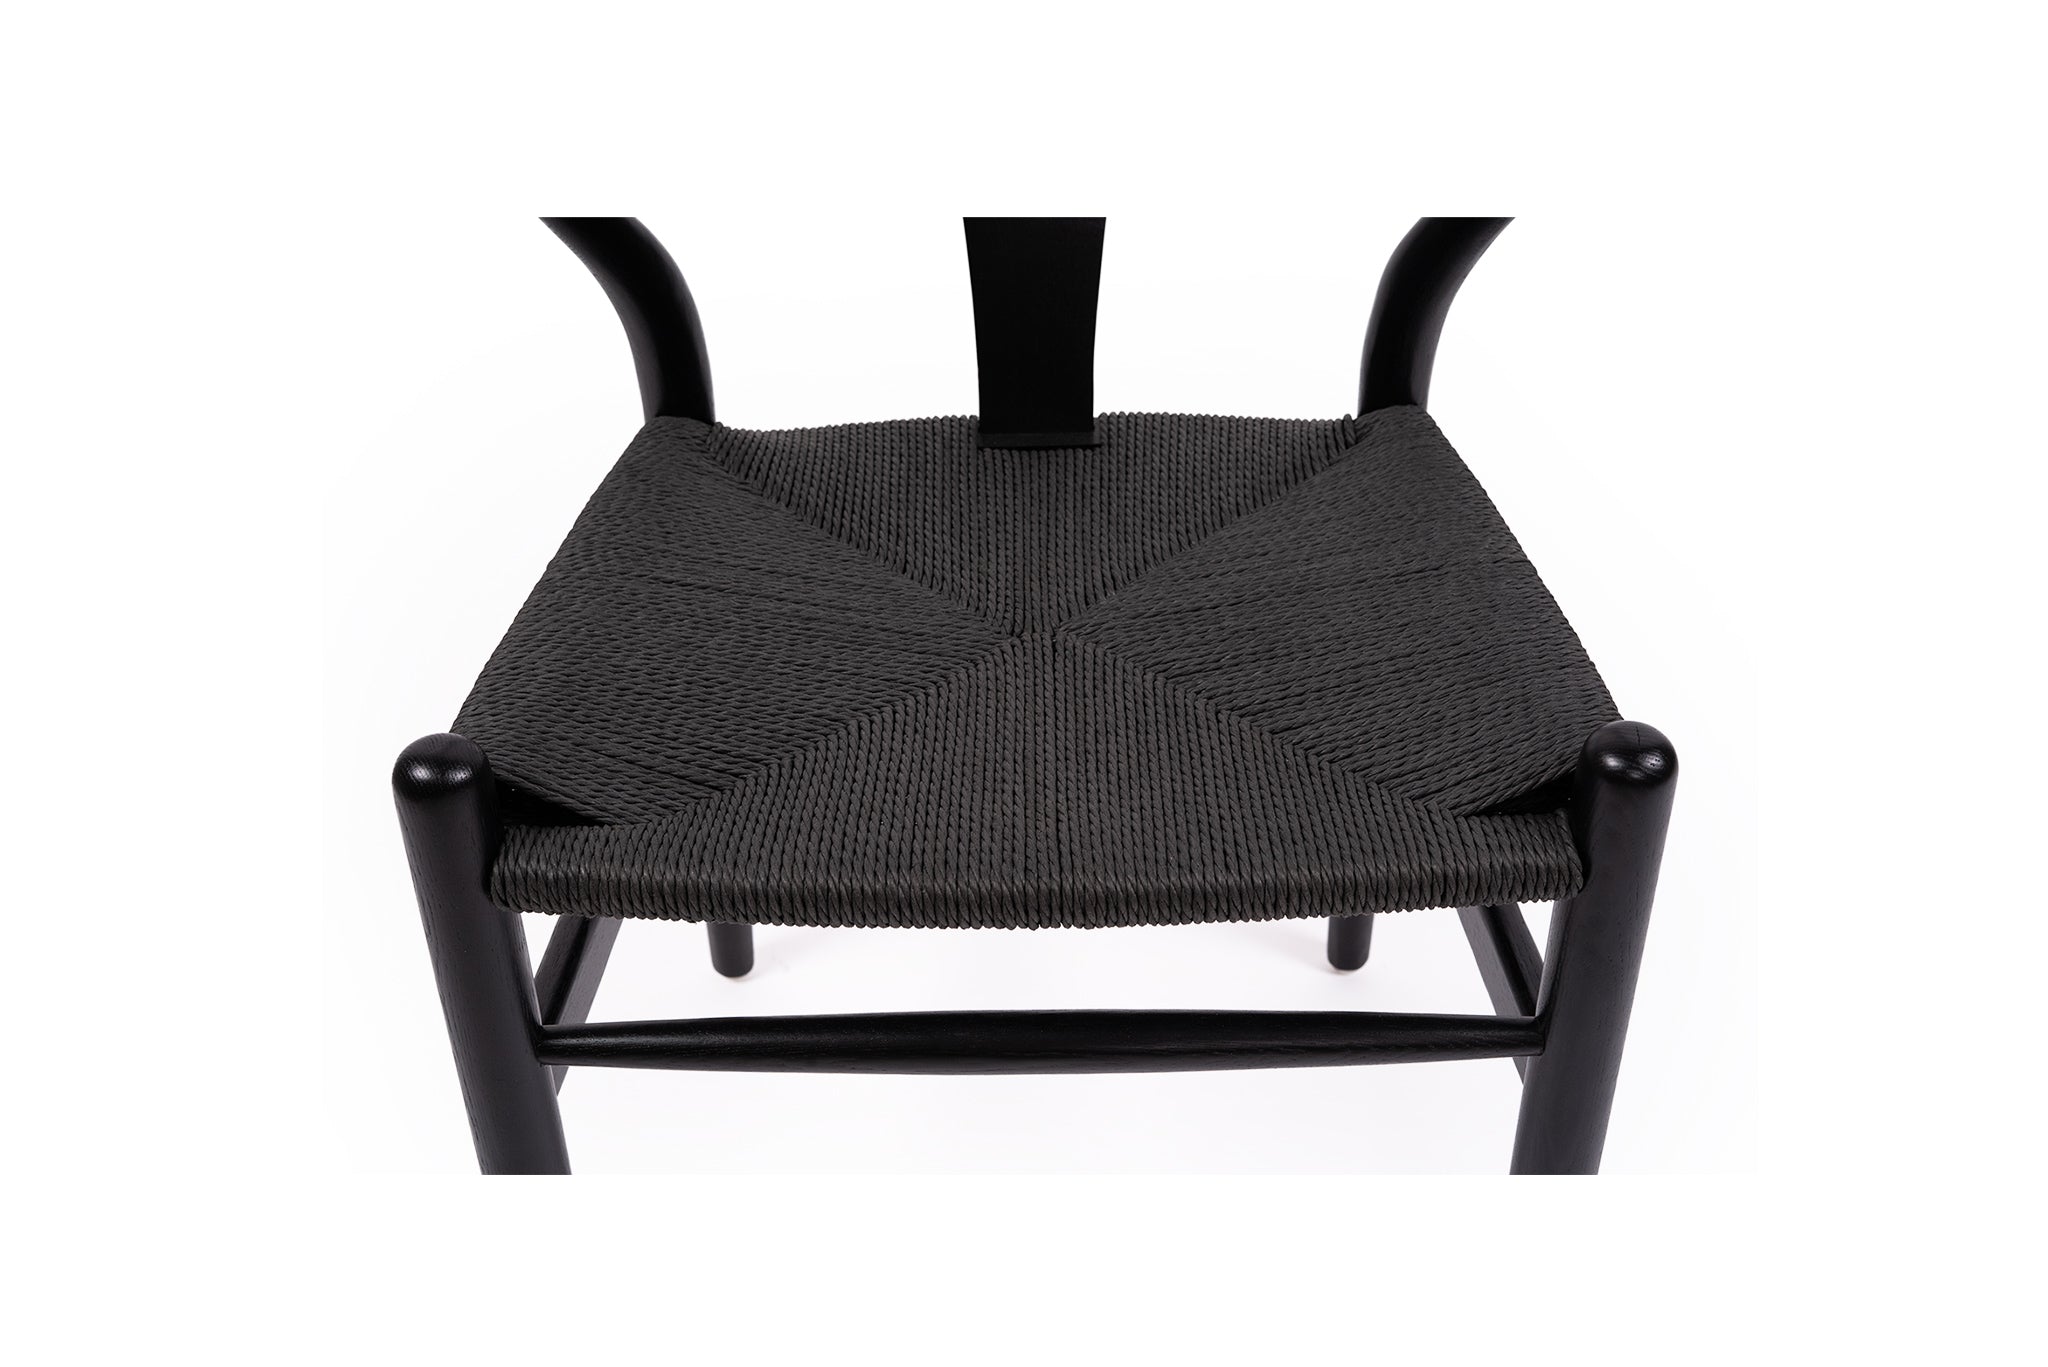 Hans Wegner Wishbone Replica Dining Chair – Black on Black